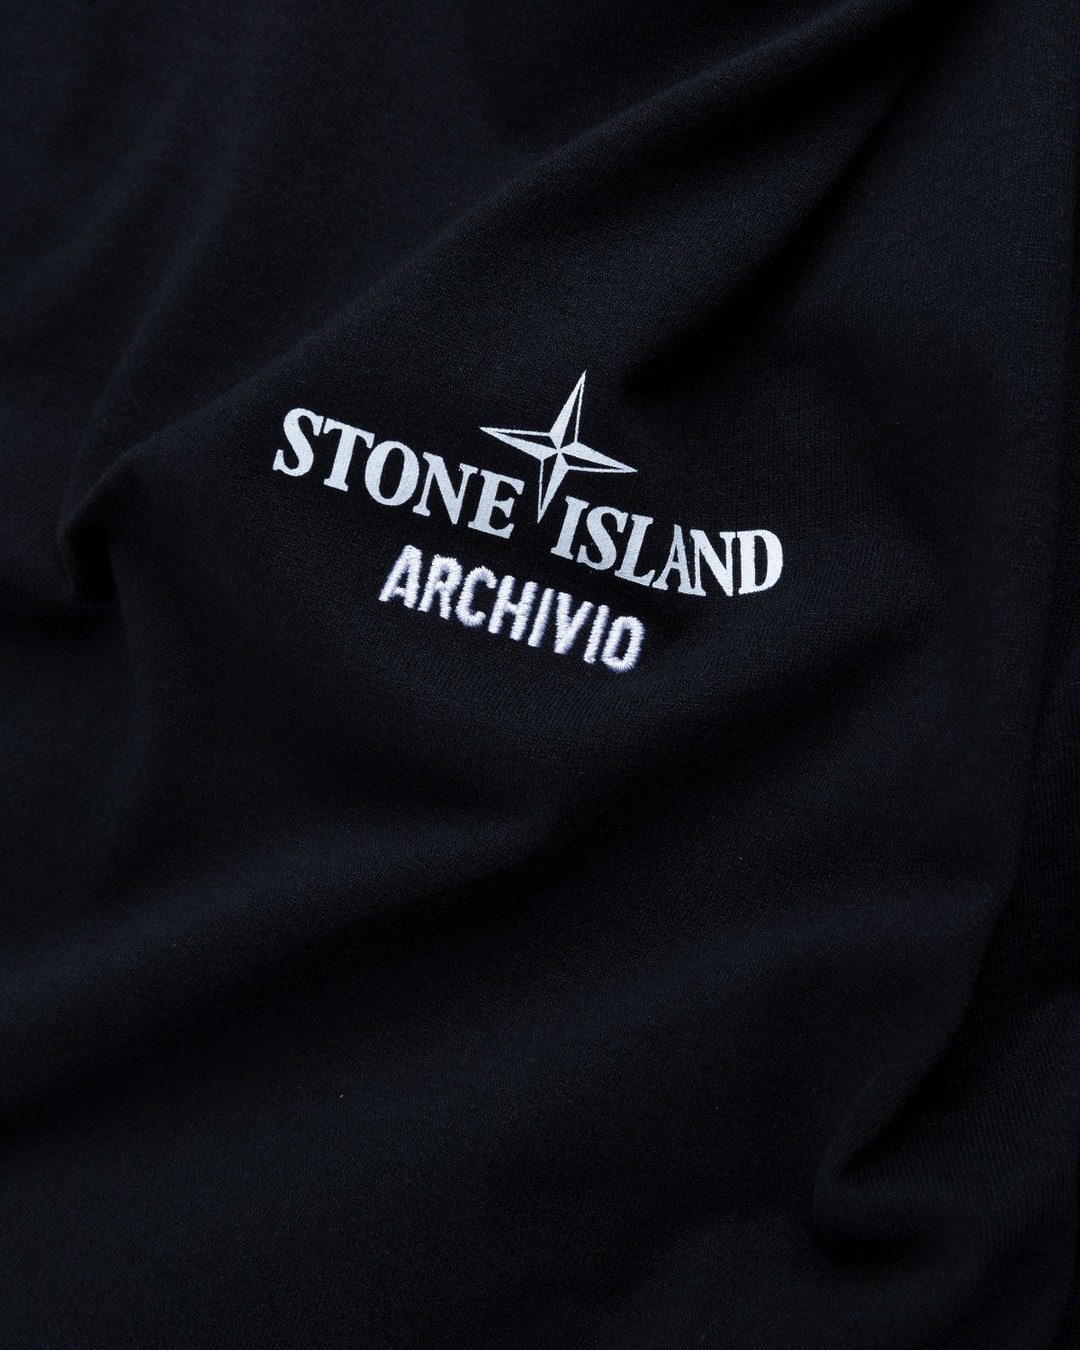 Stone Island – Archivio T-Shirt Black - Tops - Black - Image 3